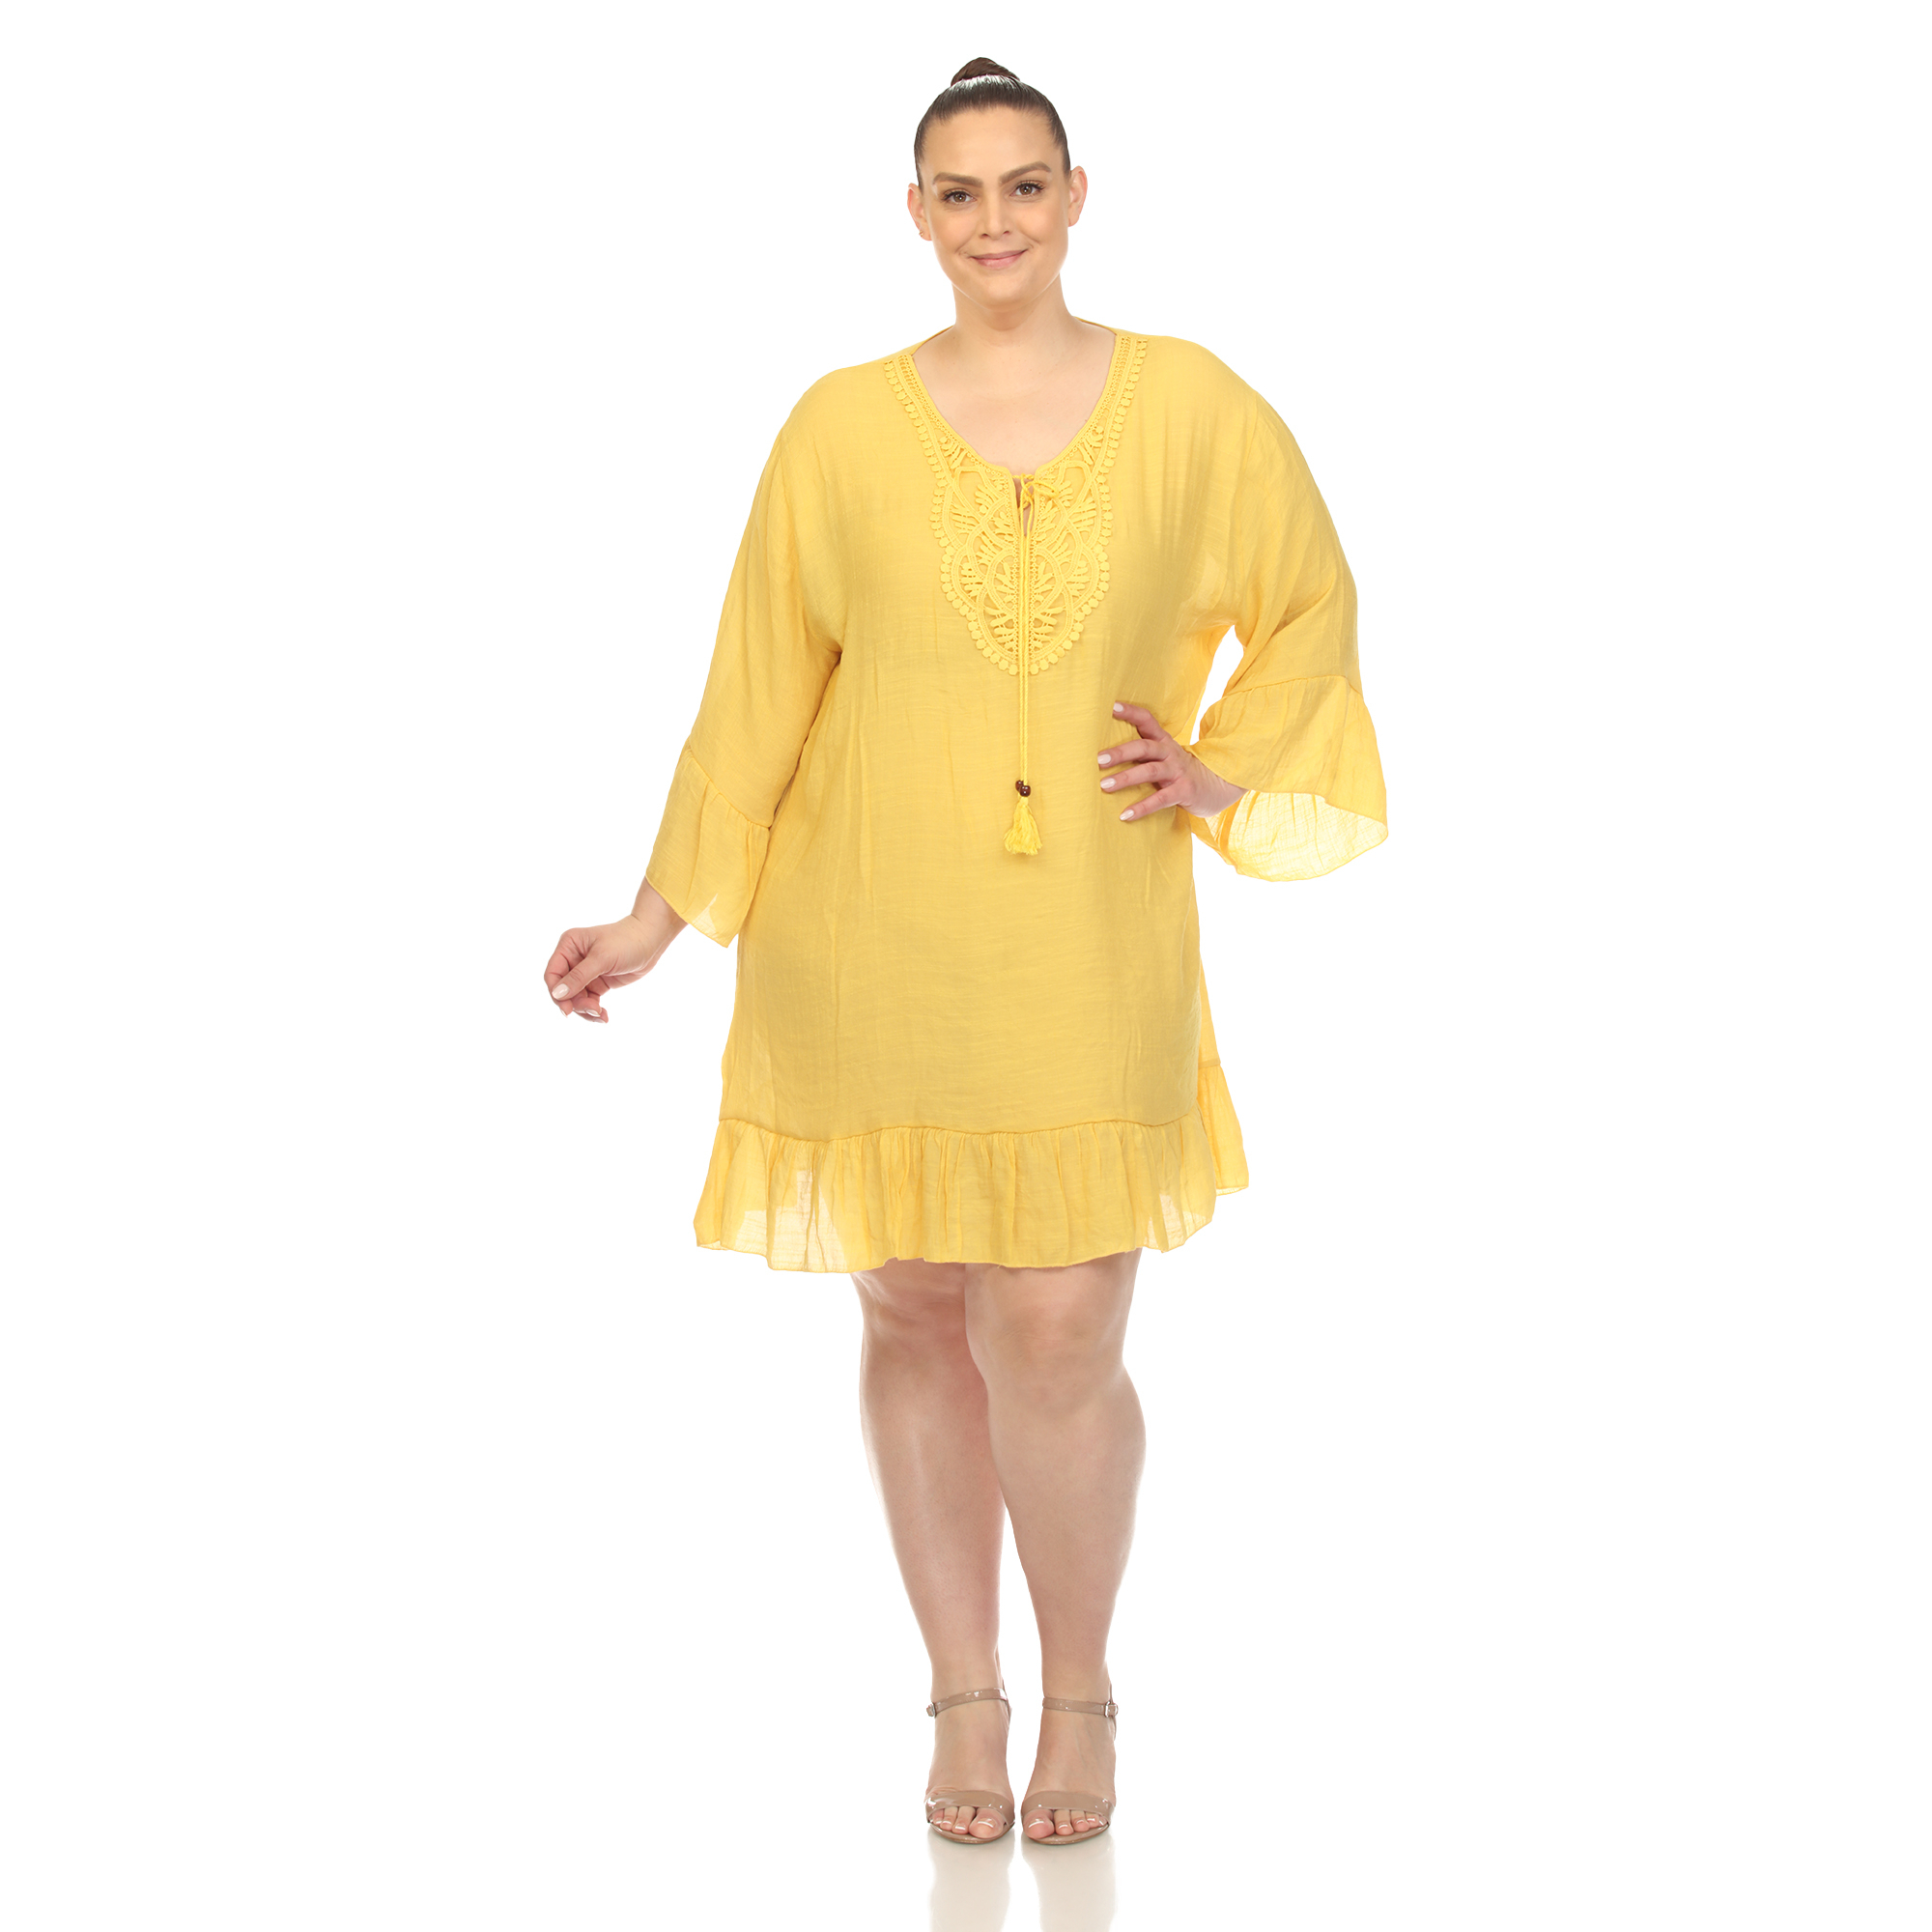 White Mark Women's Sheer Crochet Cover Up Dress - Yellow, One Size (Plus)